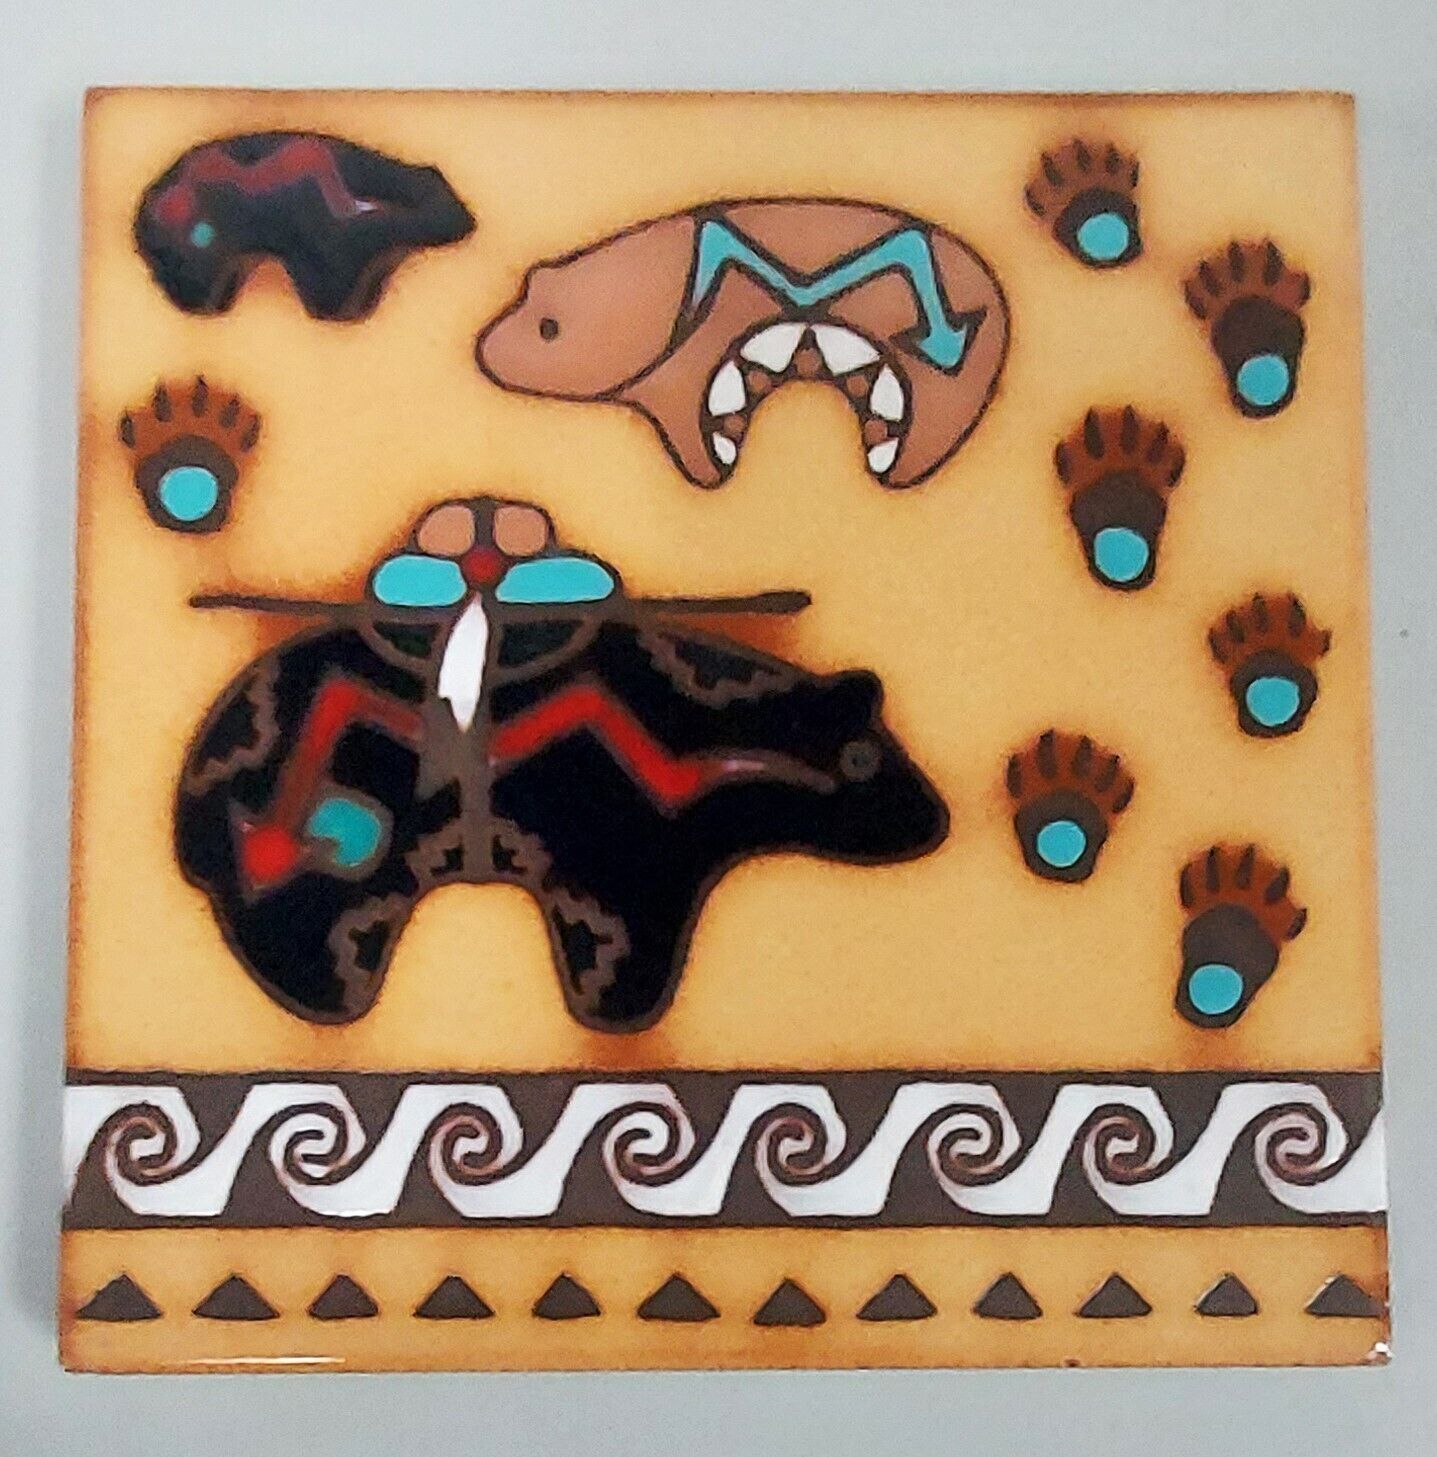 Masterworks Southwest Ceramic Tile Trivet Art, Bear w/Tracks, Sedona Arizona